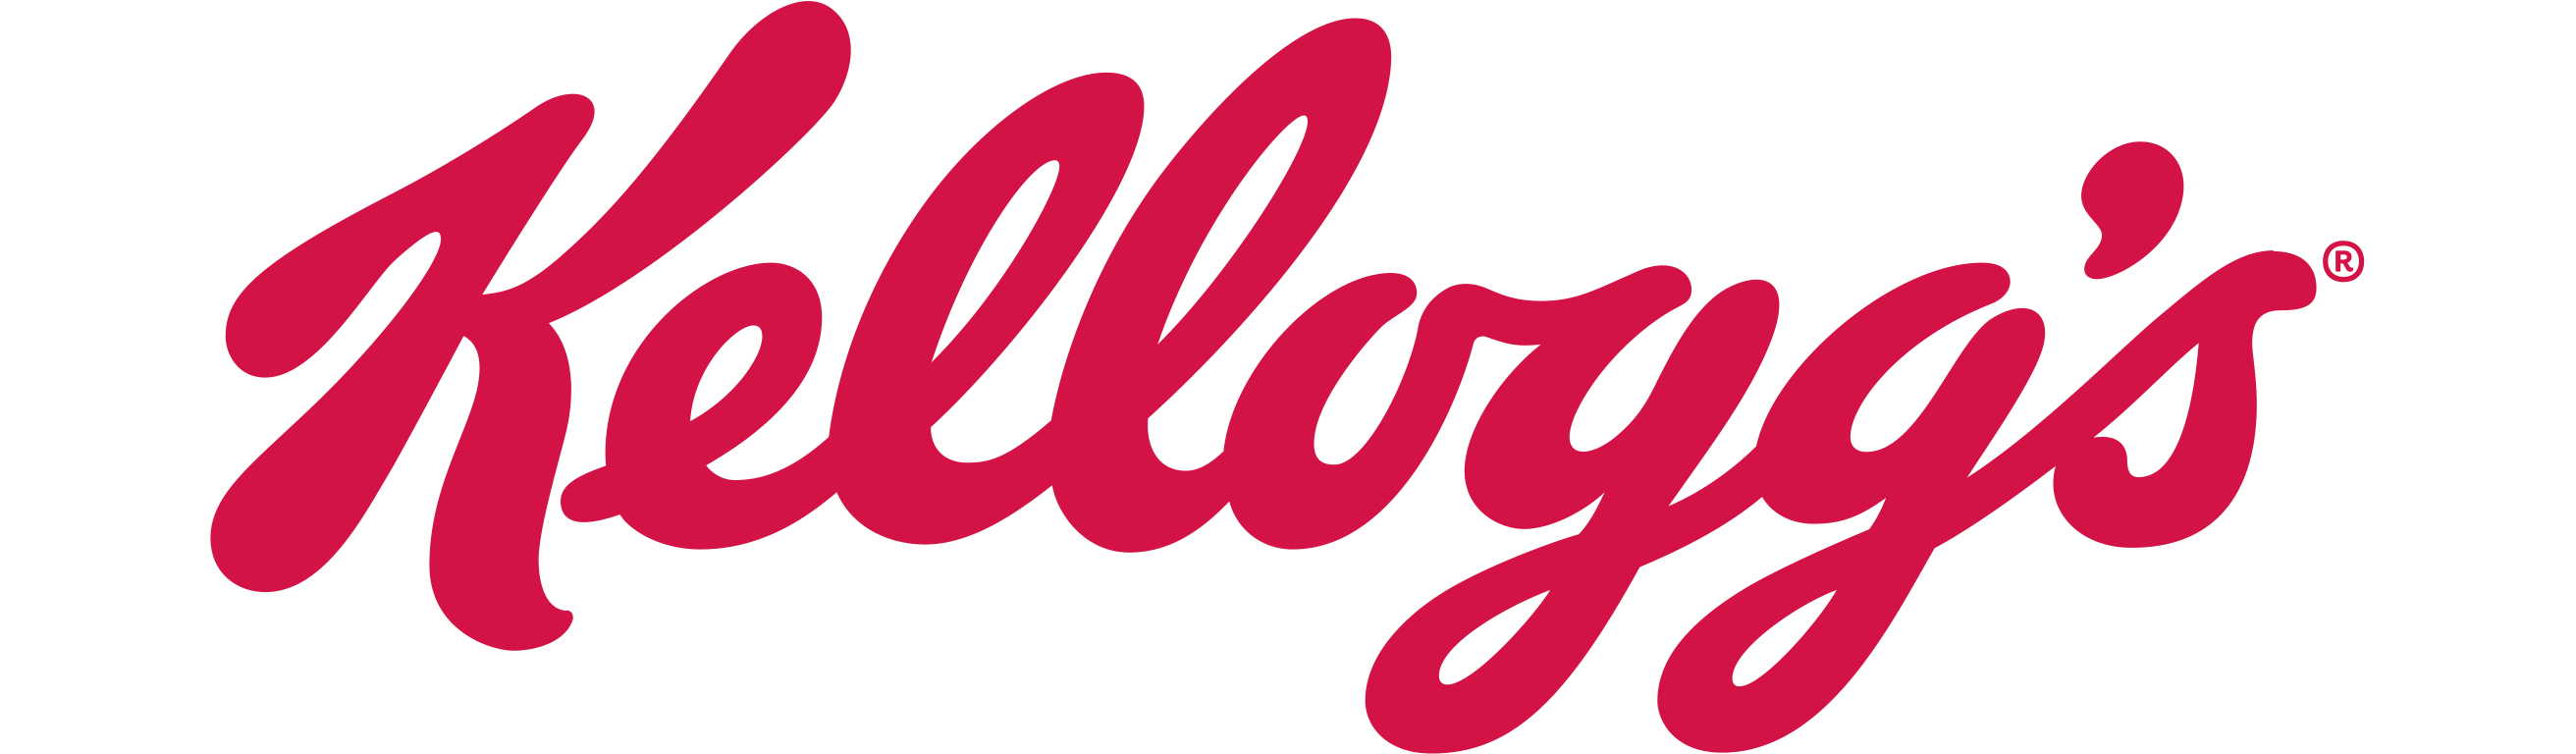 Kellogs-Logo